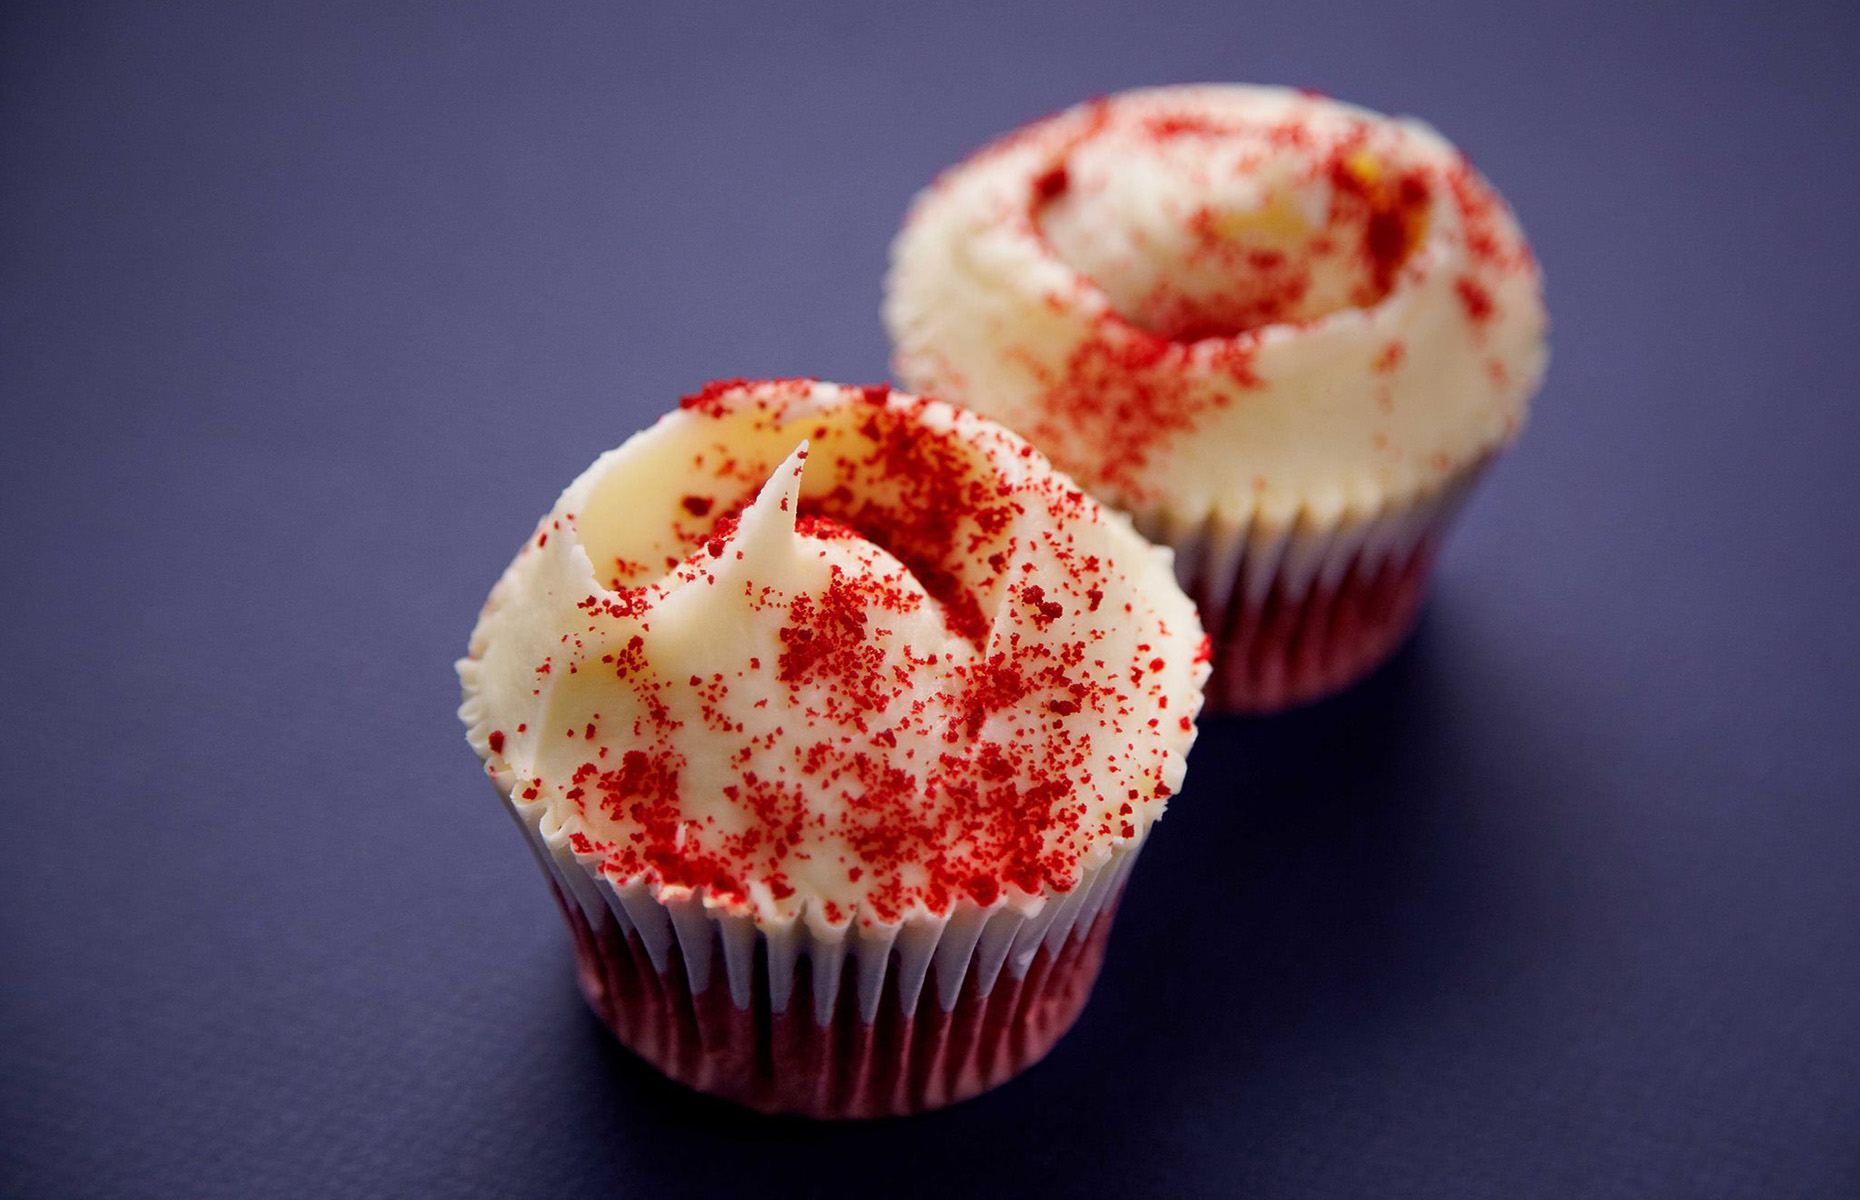 Hummingbird Bakery red velvet cupcakes (Image: HummingbirdBakery/Facebook)